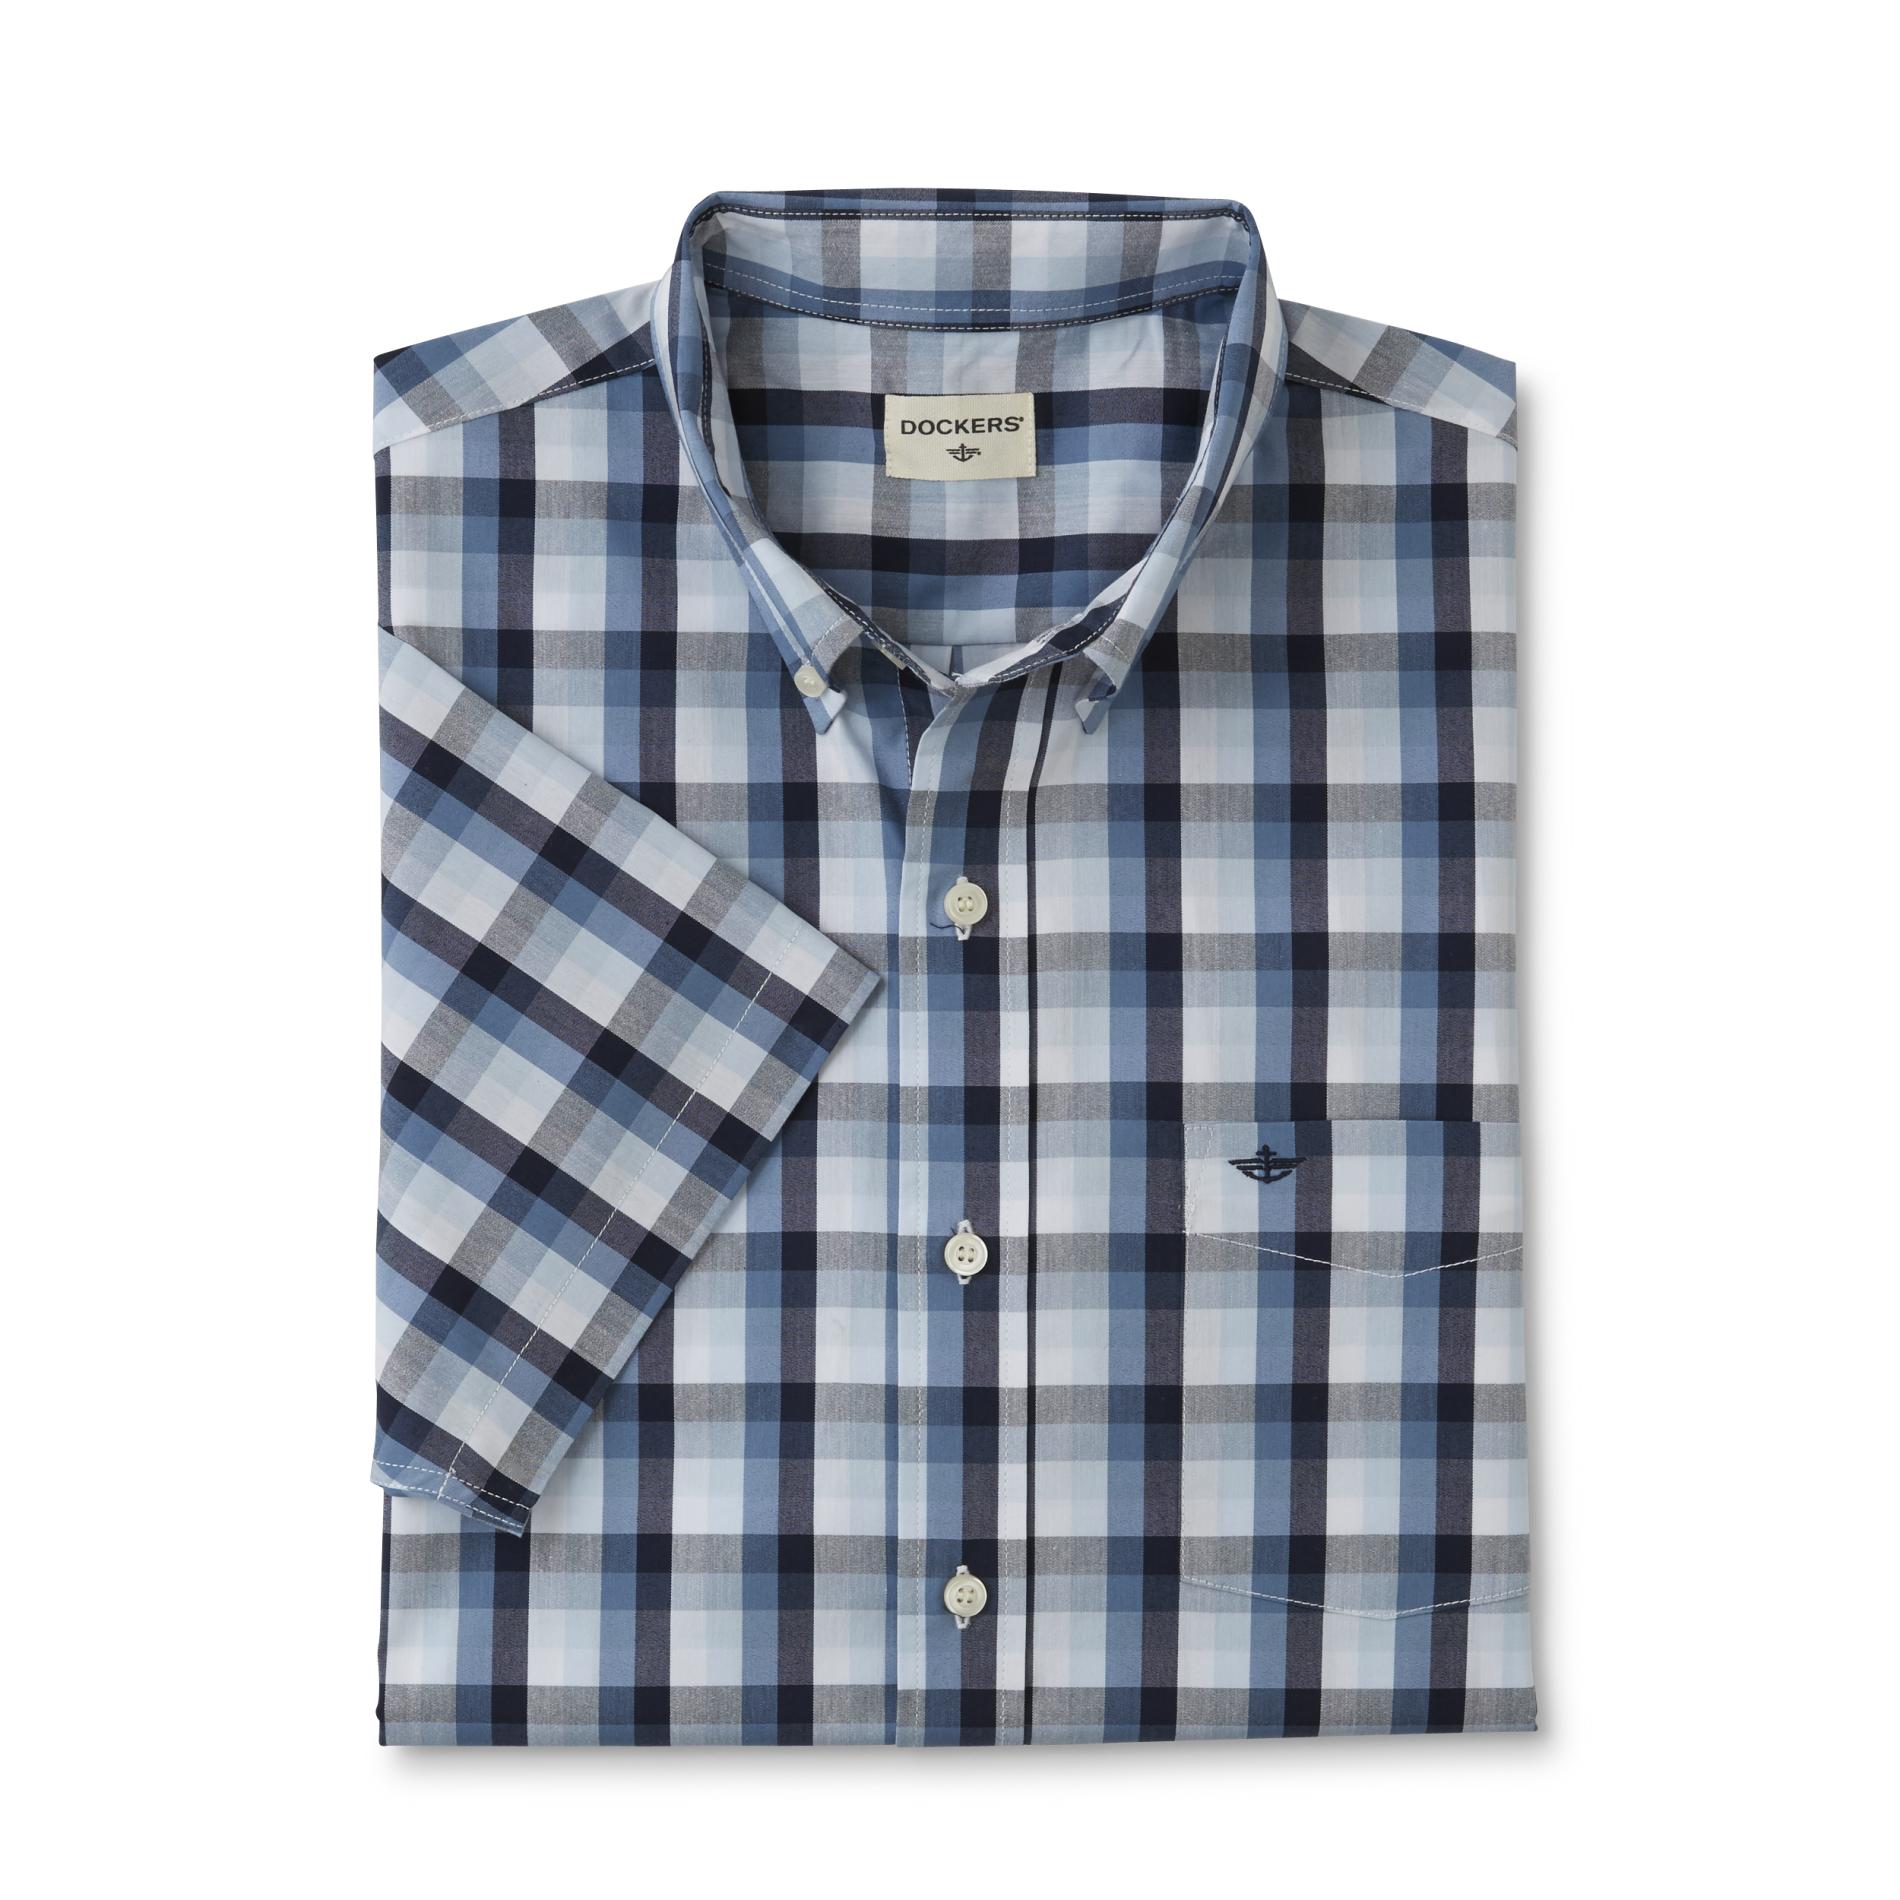 Dockers Men's Comfort Stretch Dress Shirt - Checkered